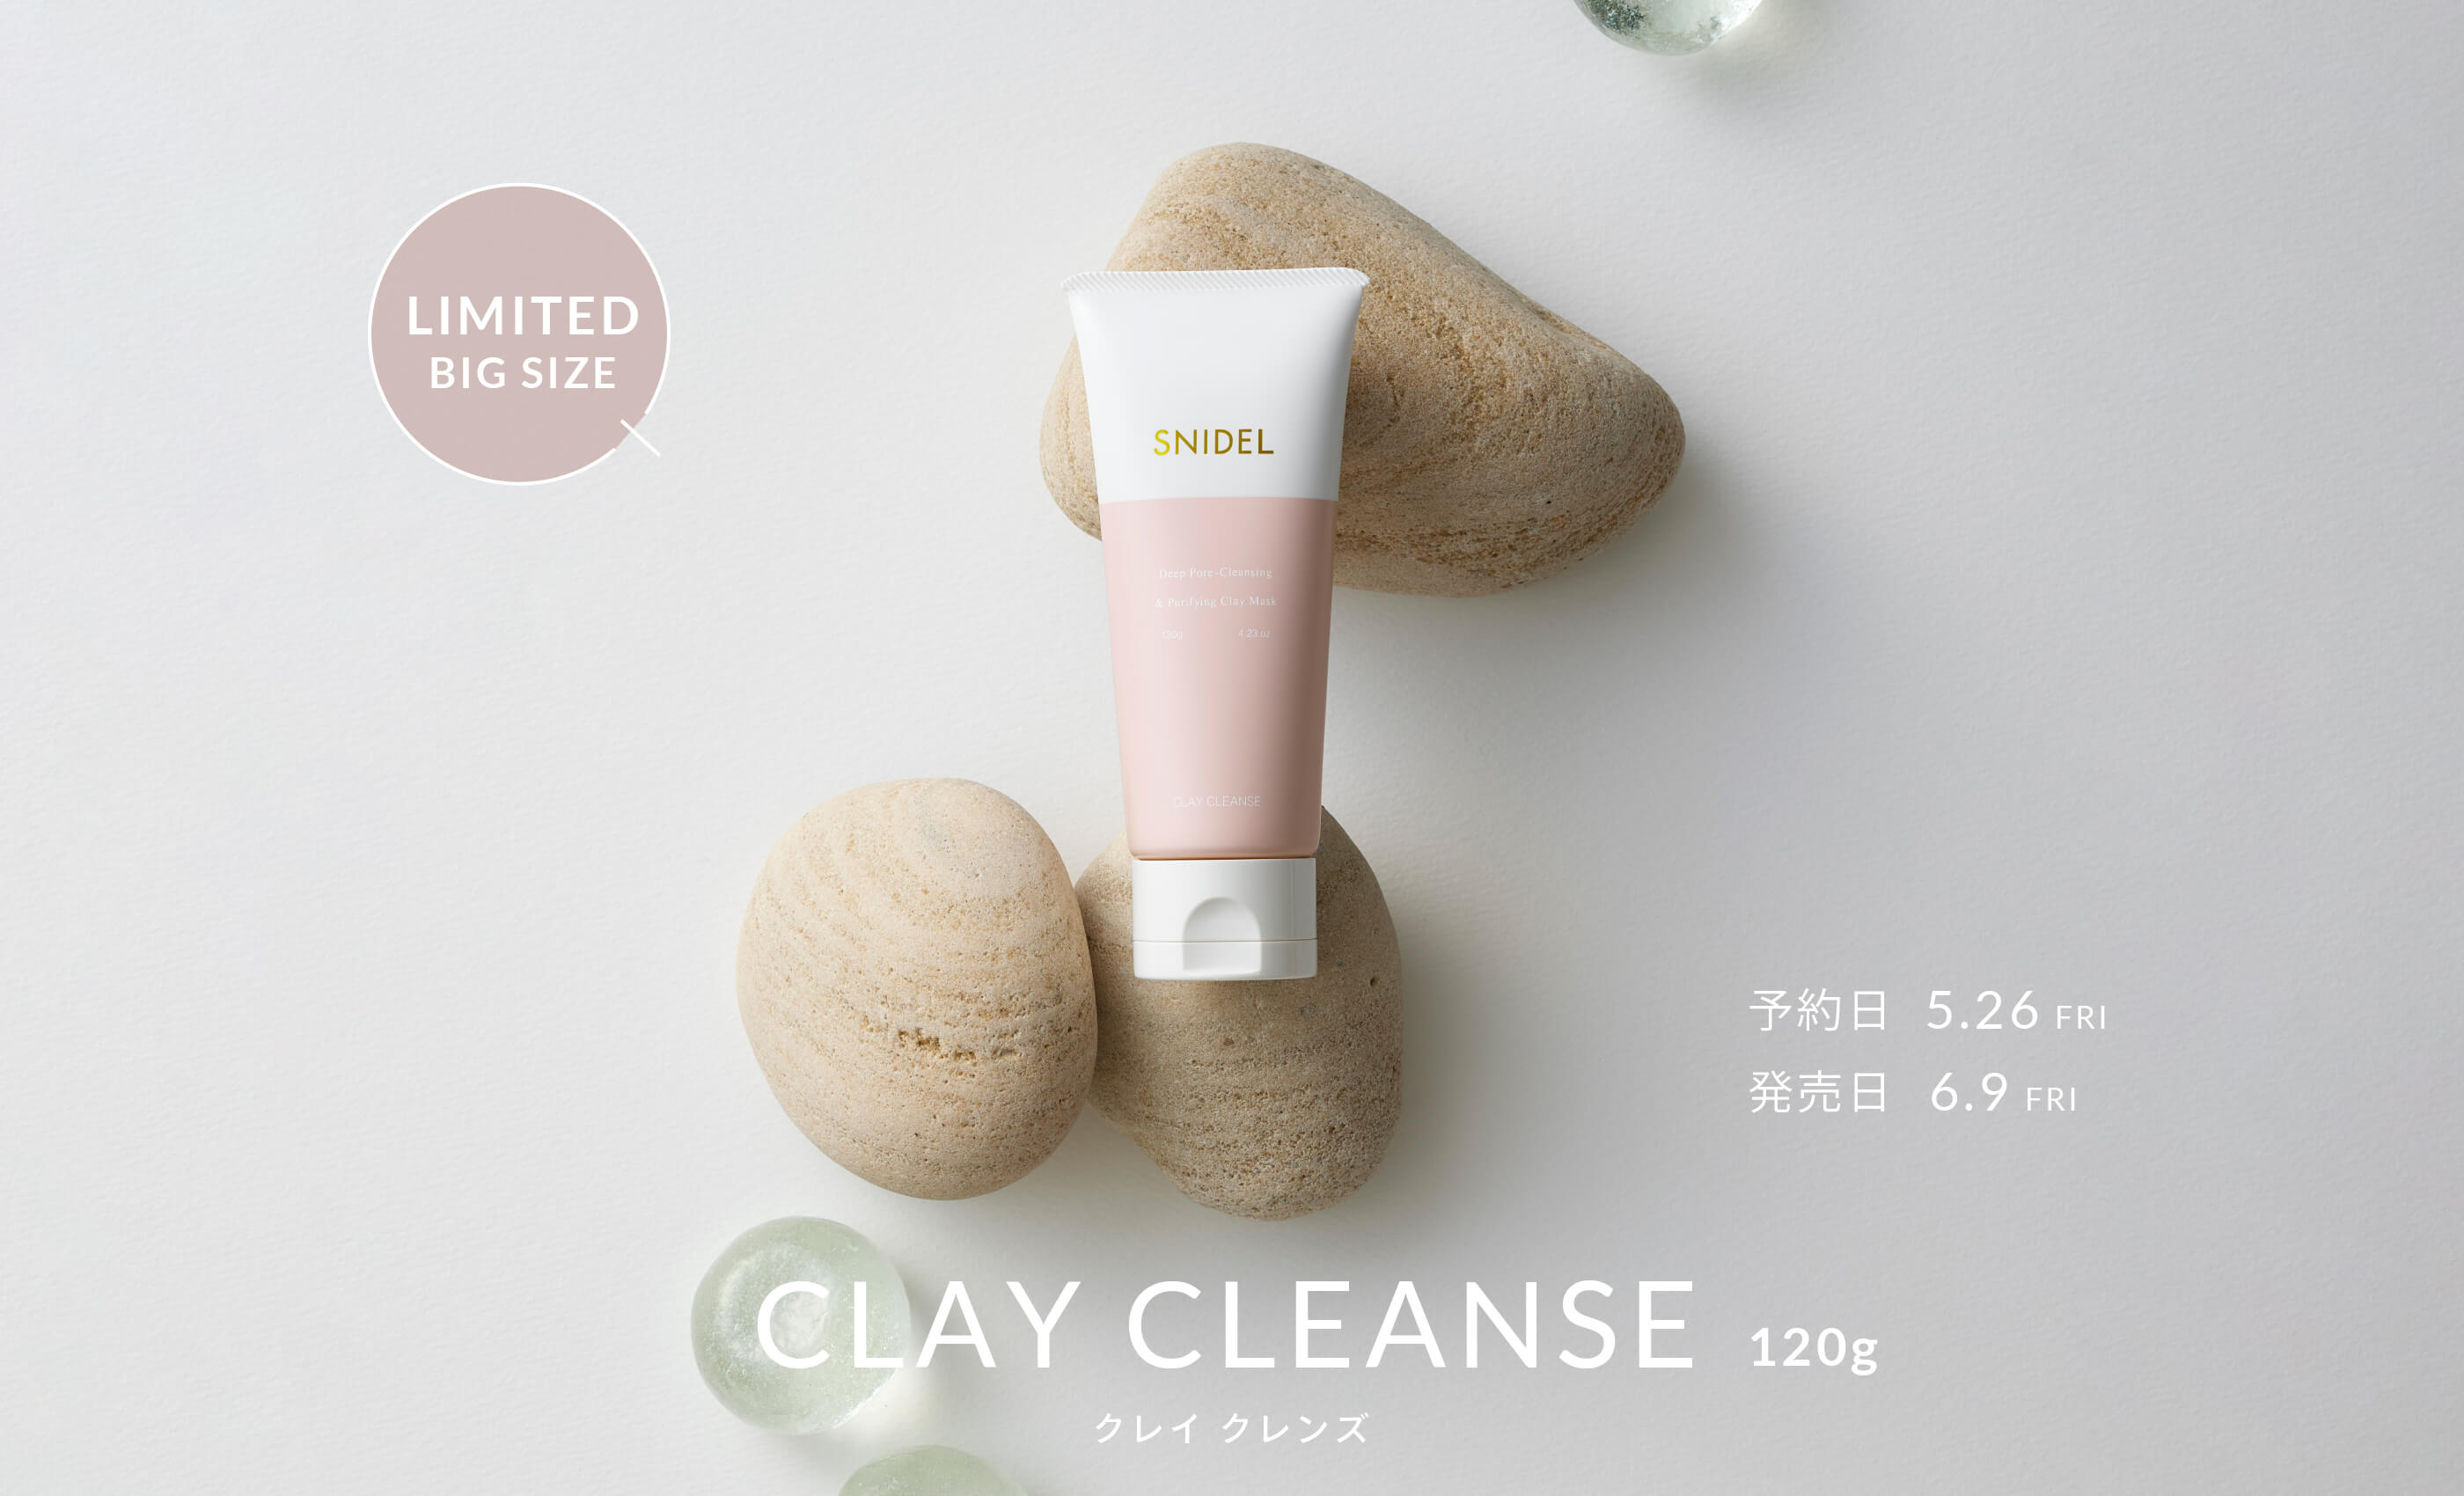 CLAY CLEANESE 120g 予約日5.26 FRI 発売日6.9 FRI